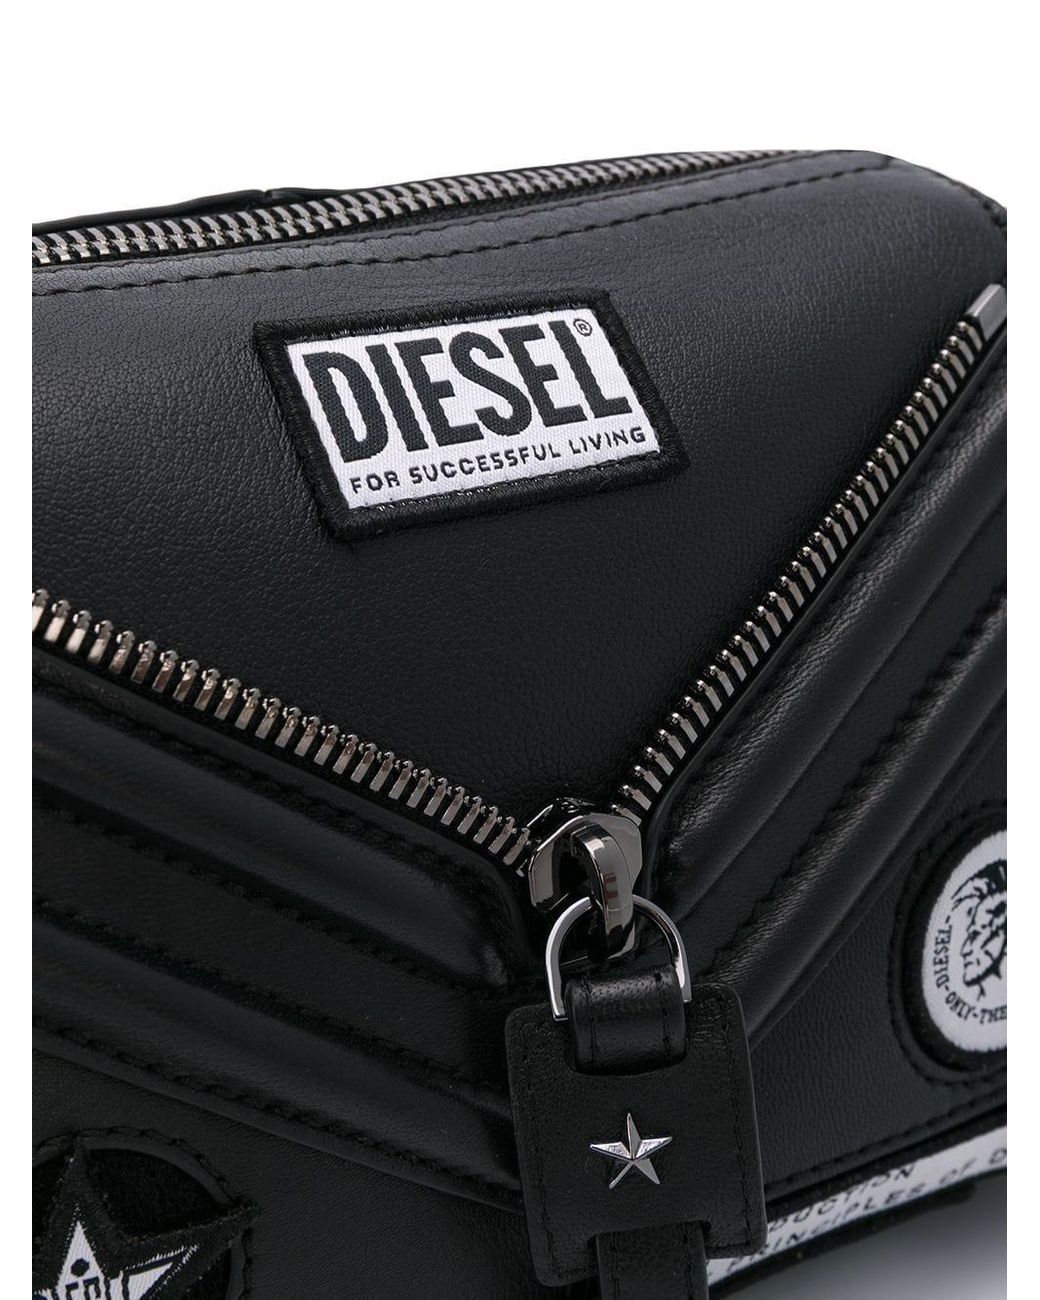 DIESEL Le-zipper Crossbody Bag in Black | Lyst Canada